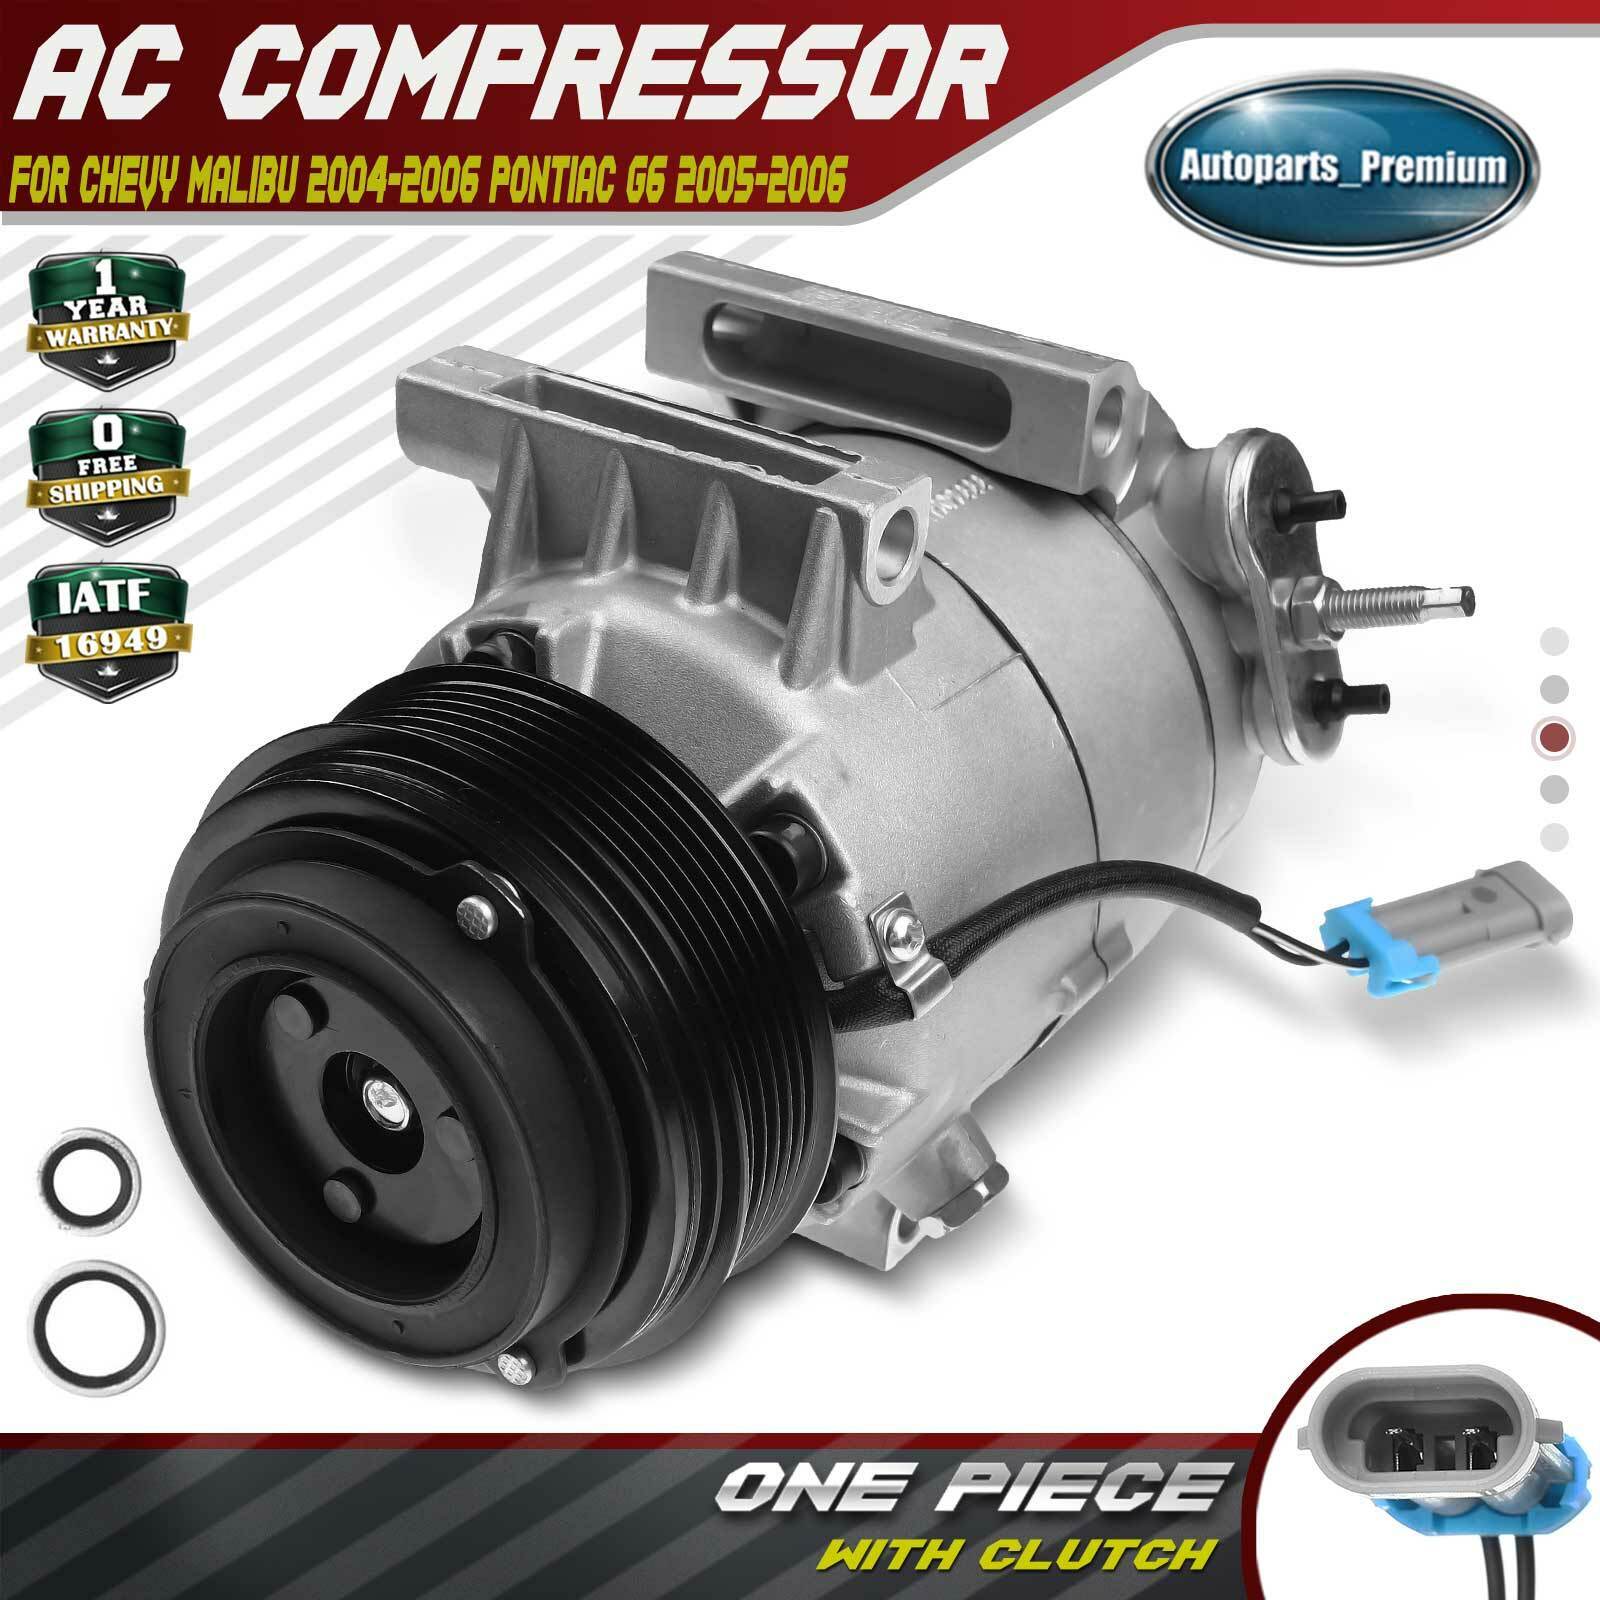 AC Compressor with Clutch for Chevrolet Malibu 2004-2006 Pontiac G6 2005-2006